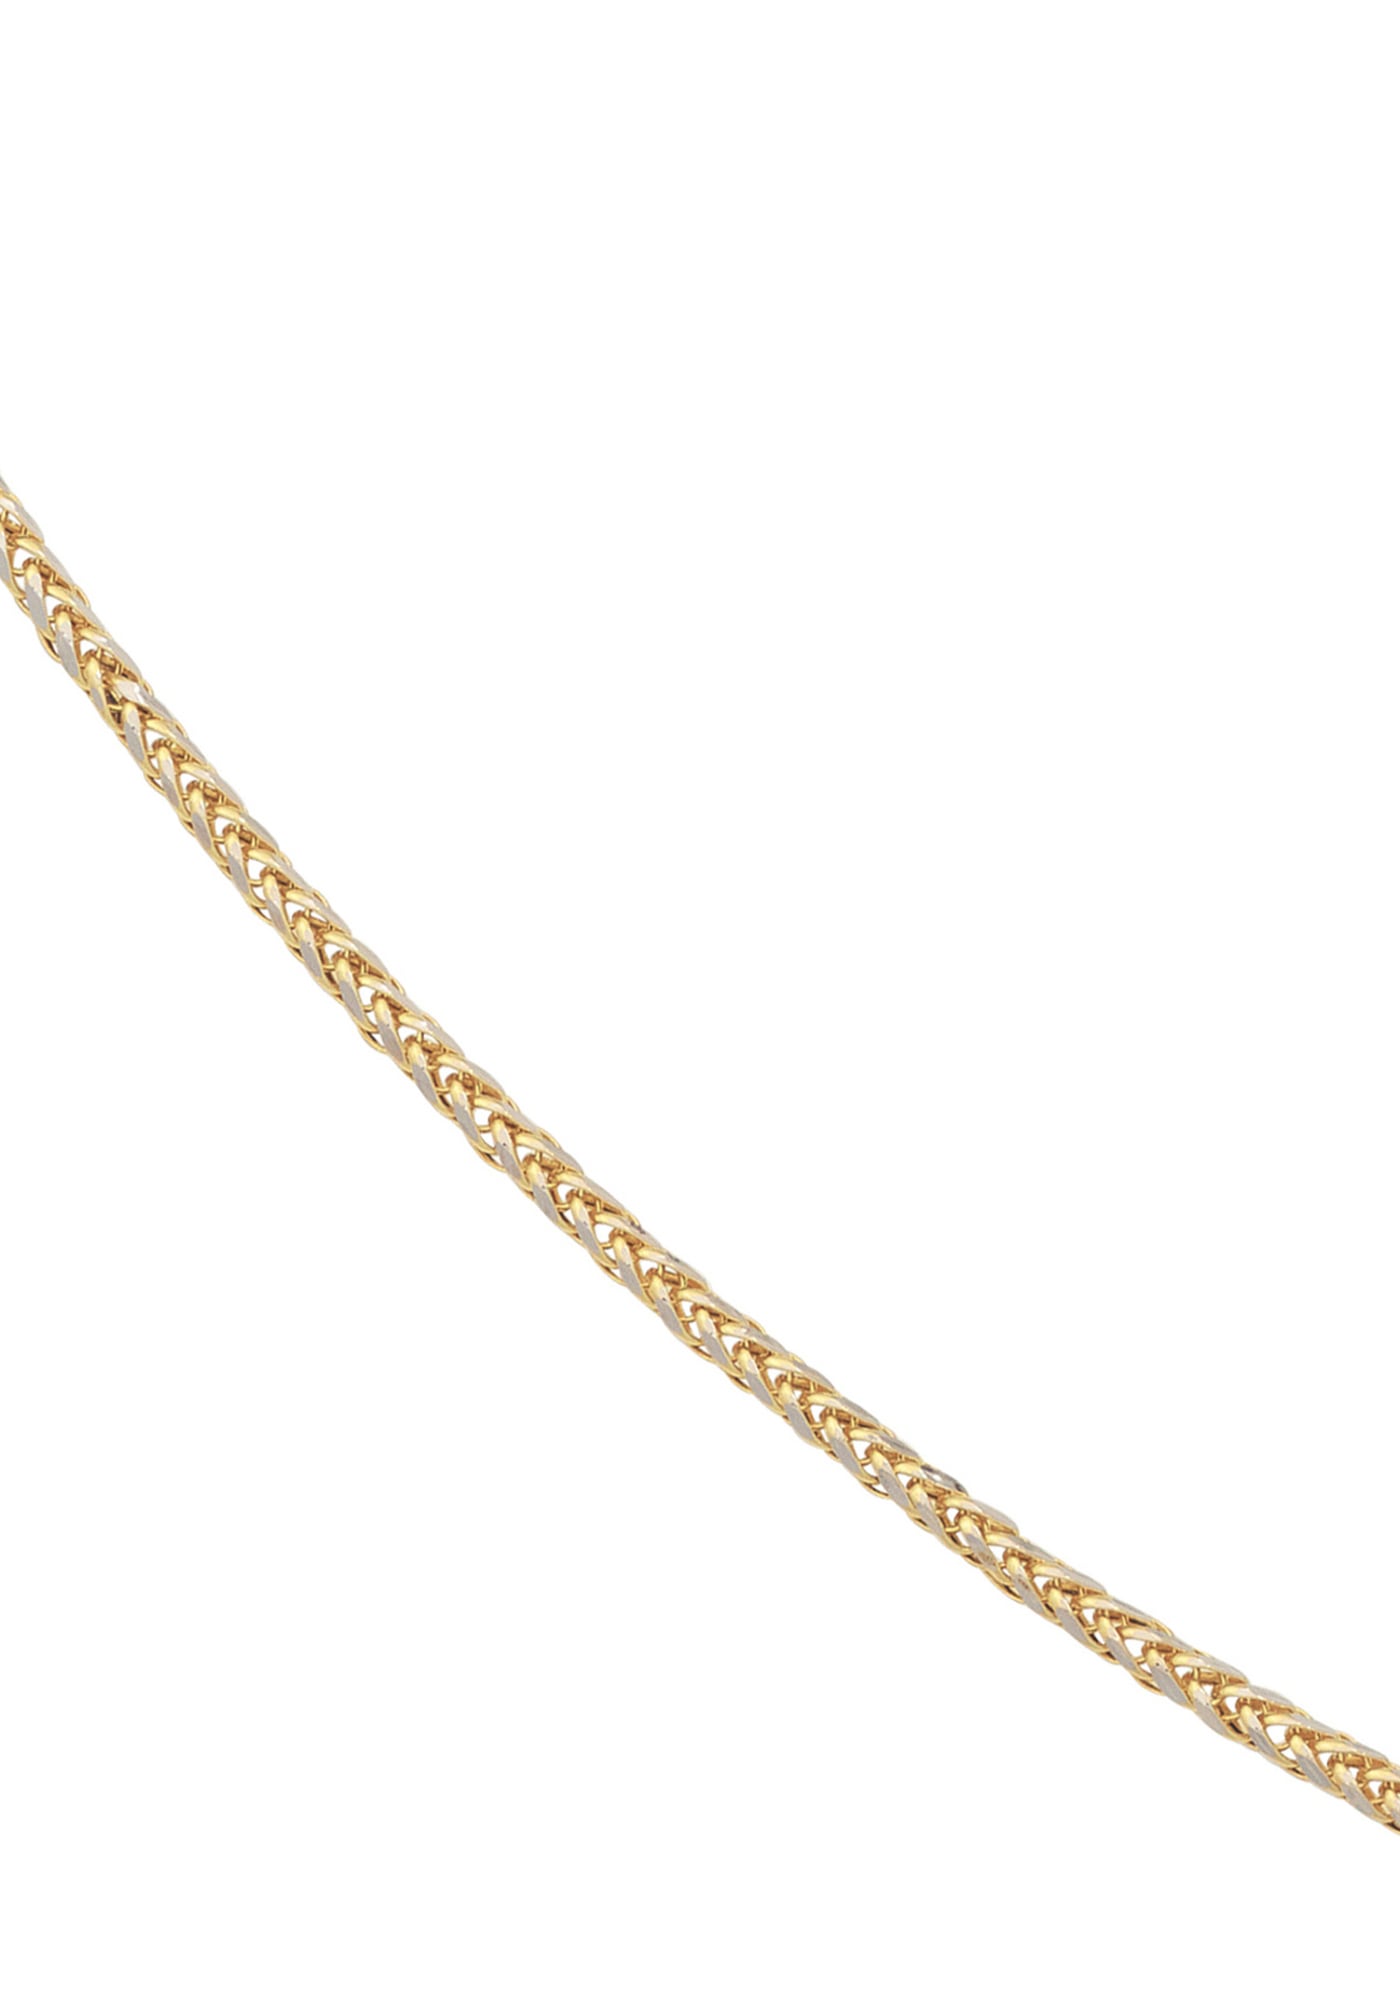 JOBO Goldkette, Zopfkette | 45 585 mm 1,9 cm kaufen online bicolor BAUR Gold